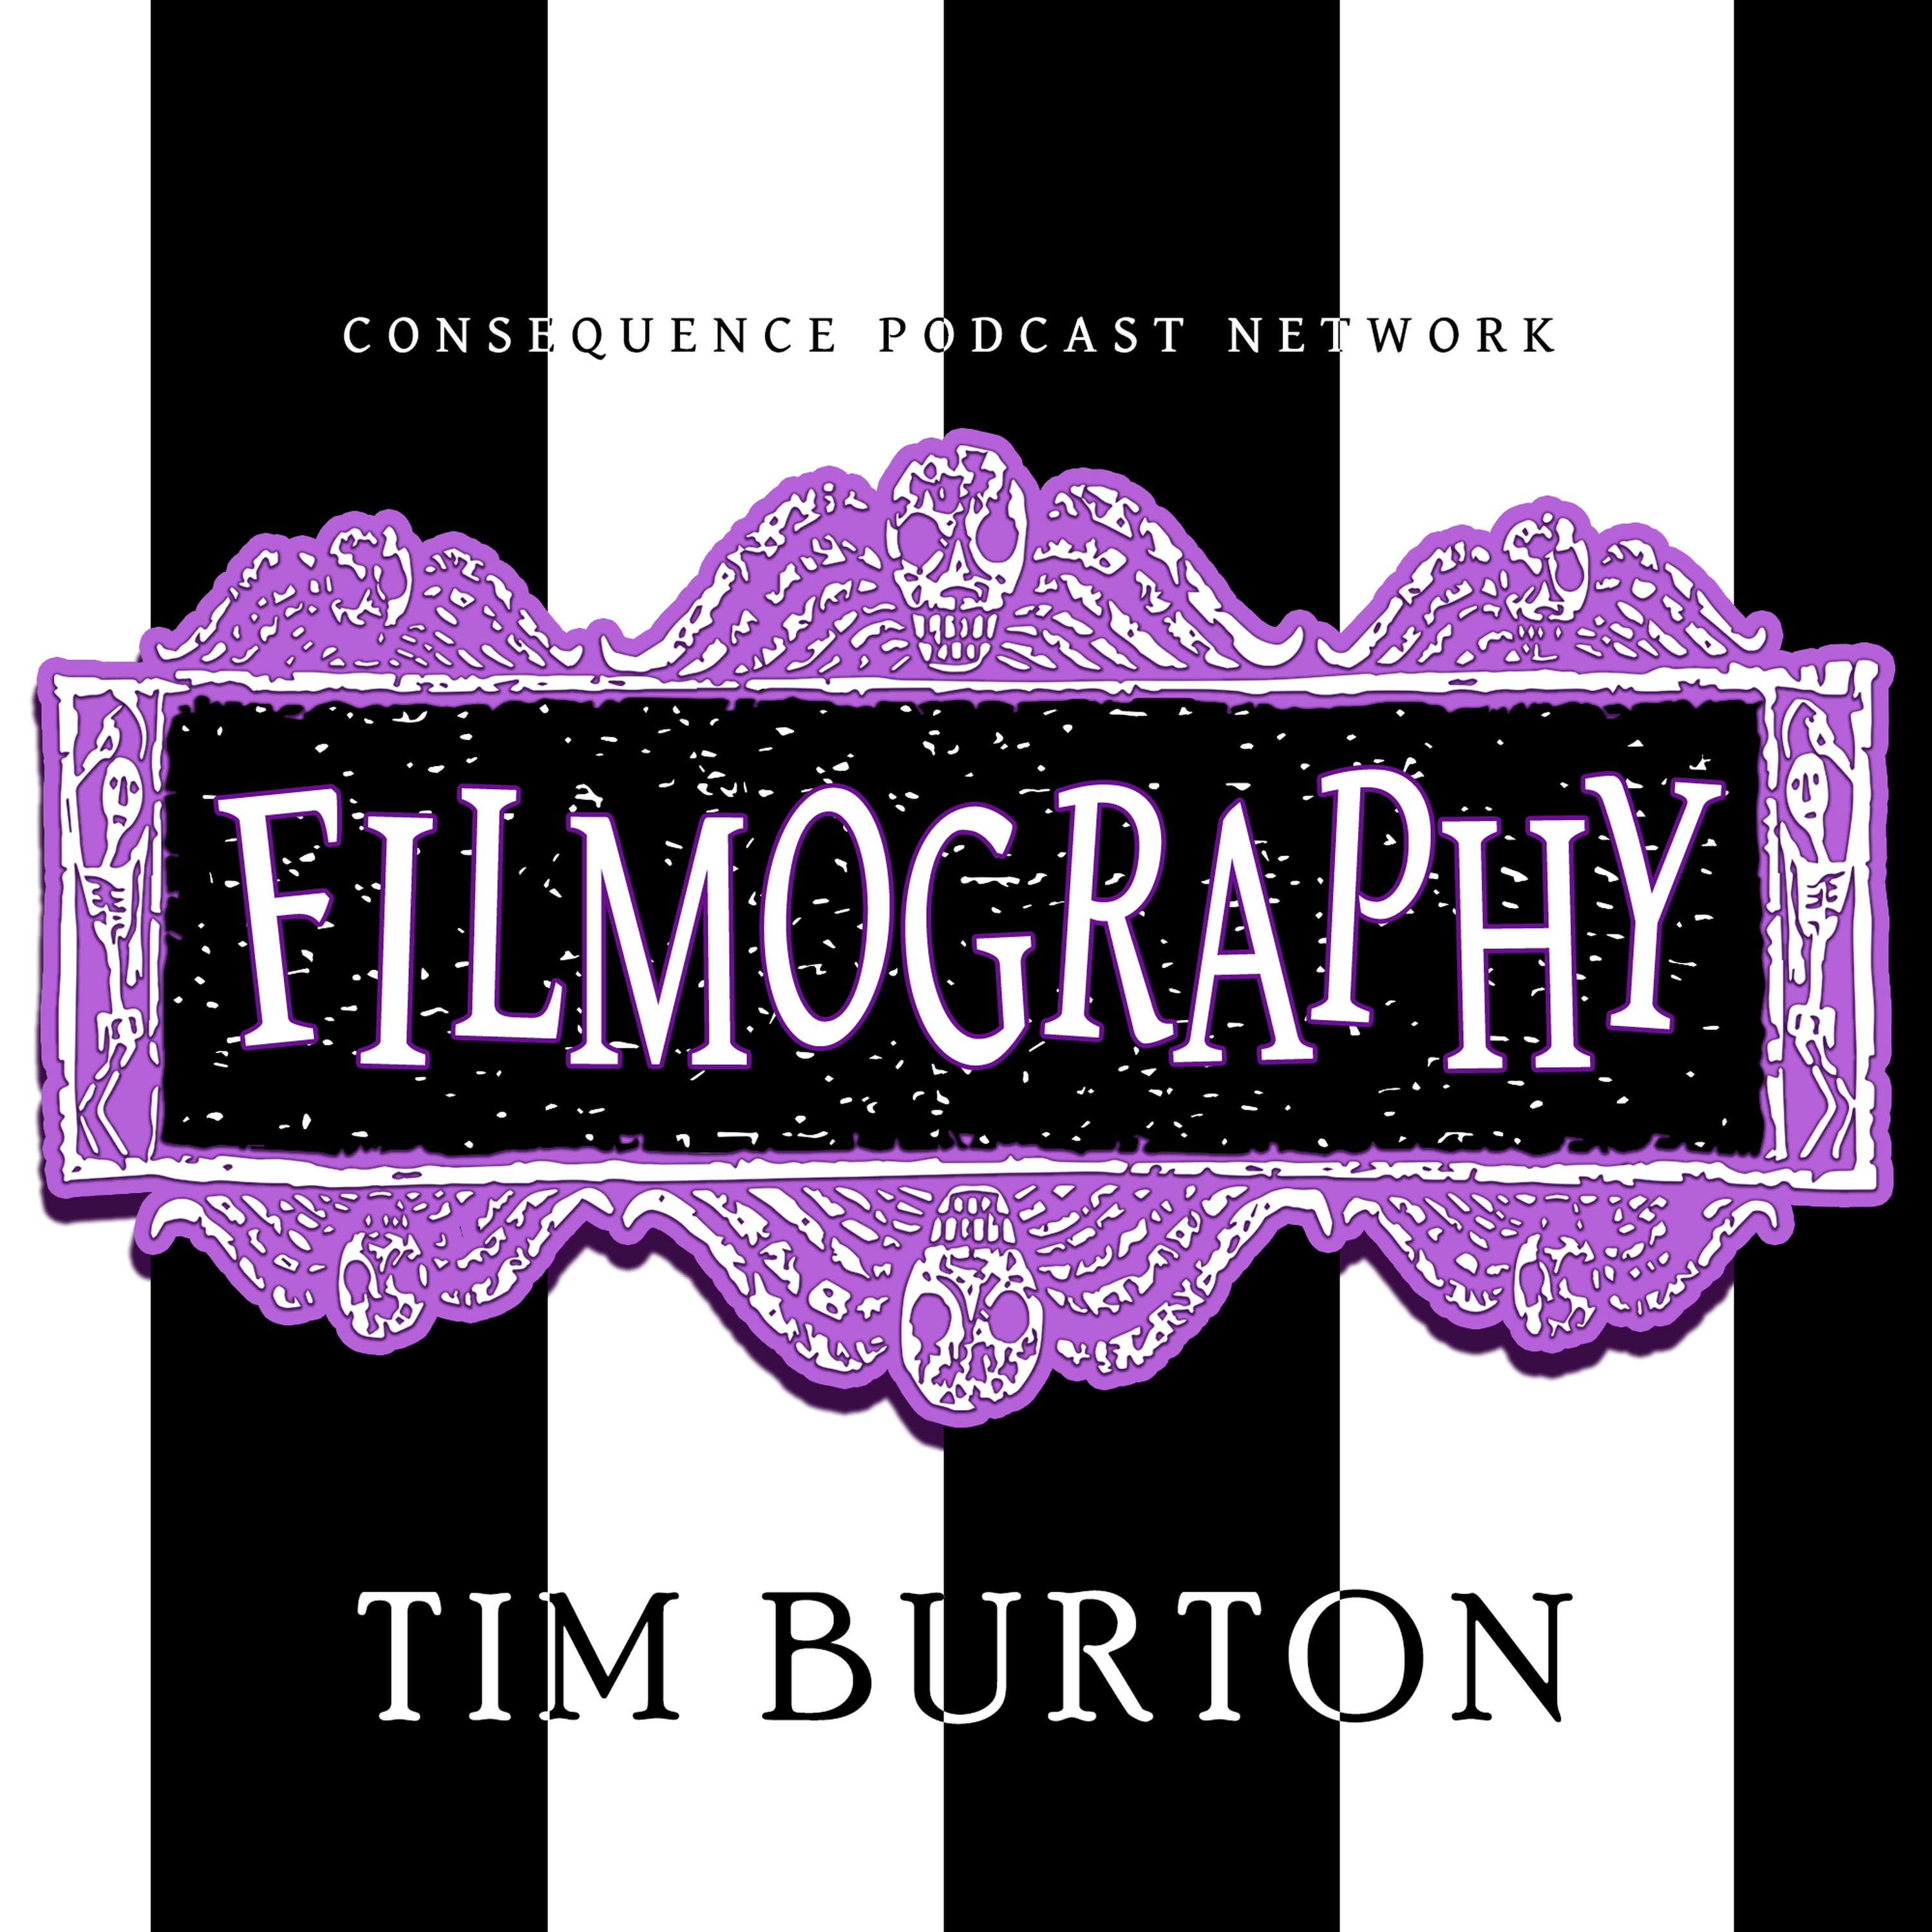 Tim Burton: Adult - Ed Wood, Big Fish, Sweeney Todd, and Big Eyes